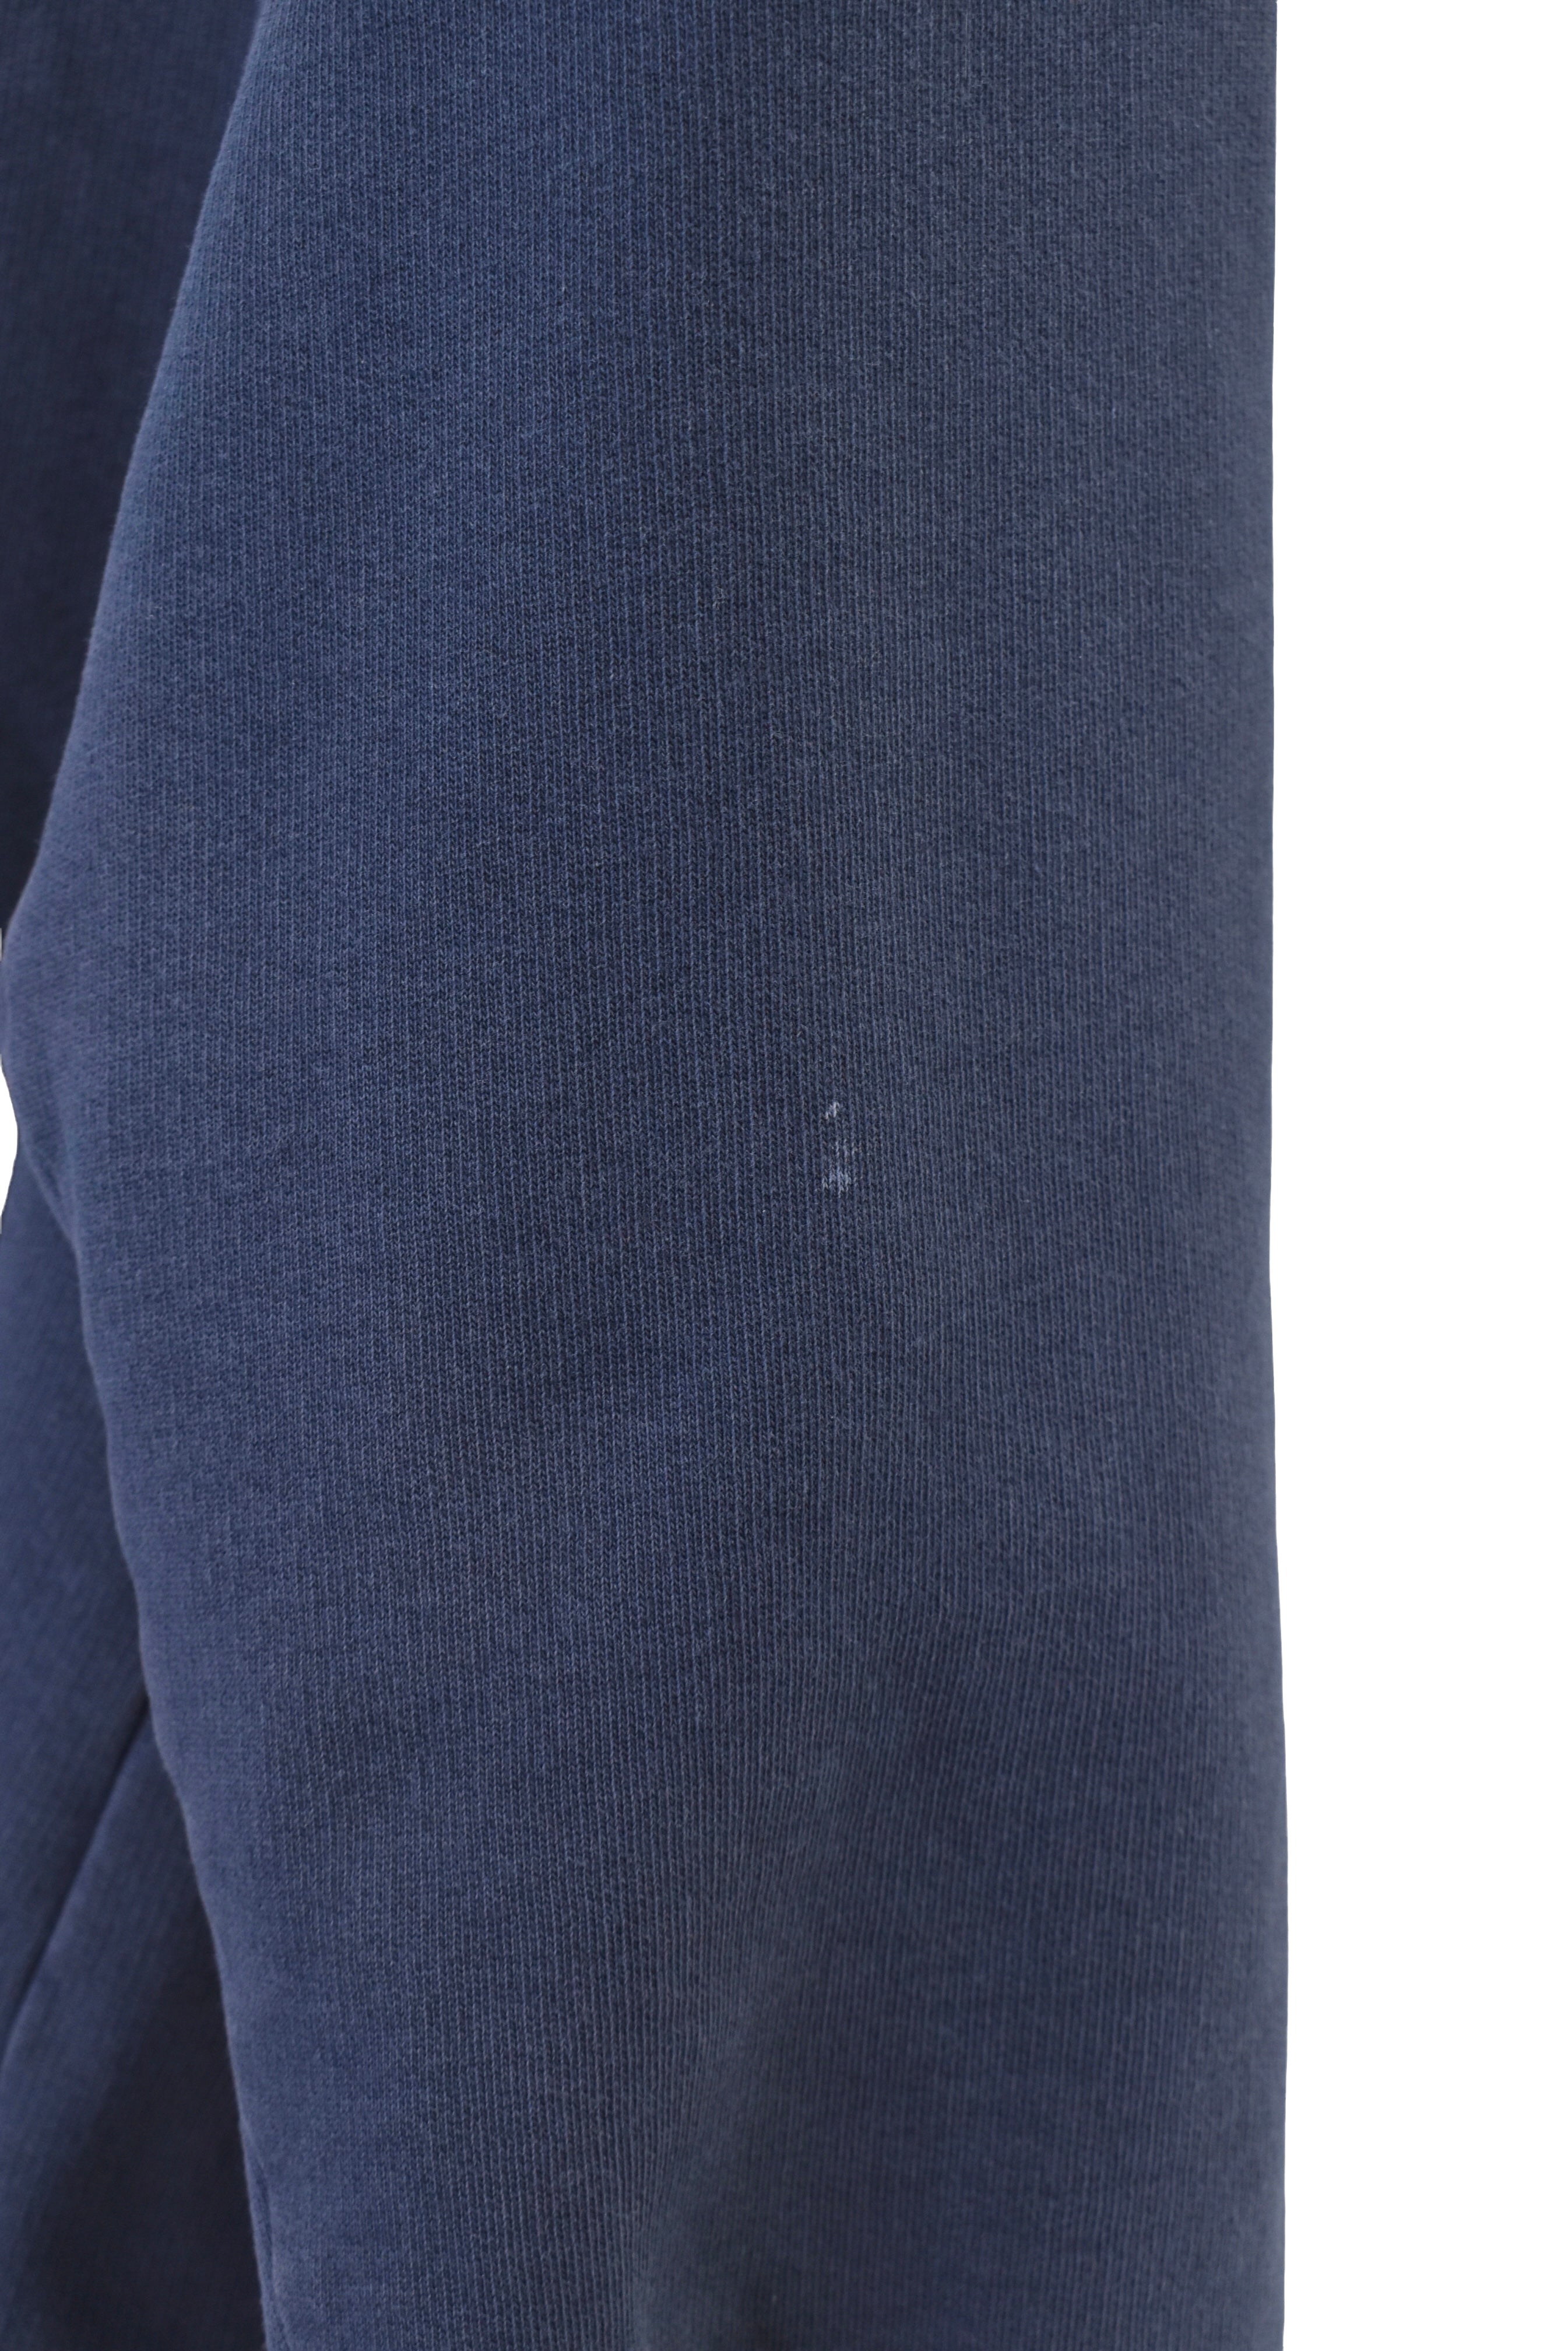 Vintage Fila sweatshirt, navy blue embroidered 1/4 zip jumper - Small